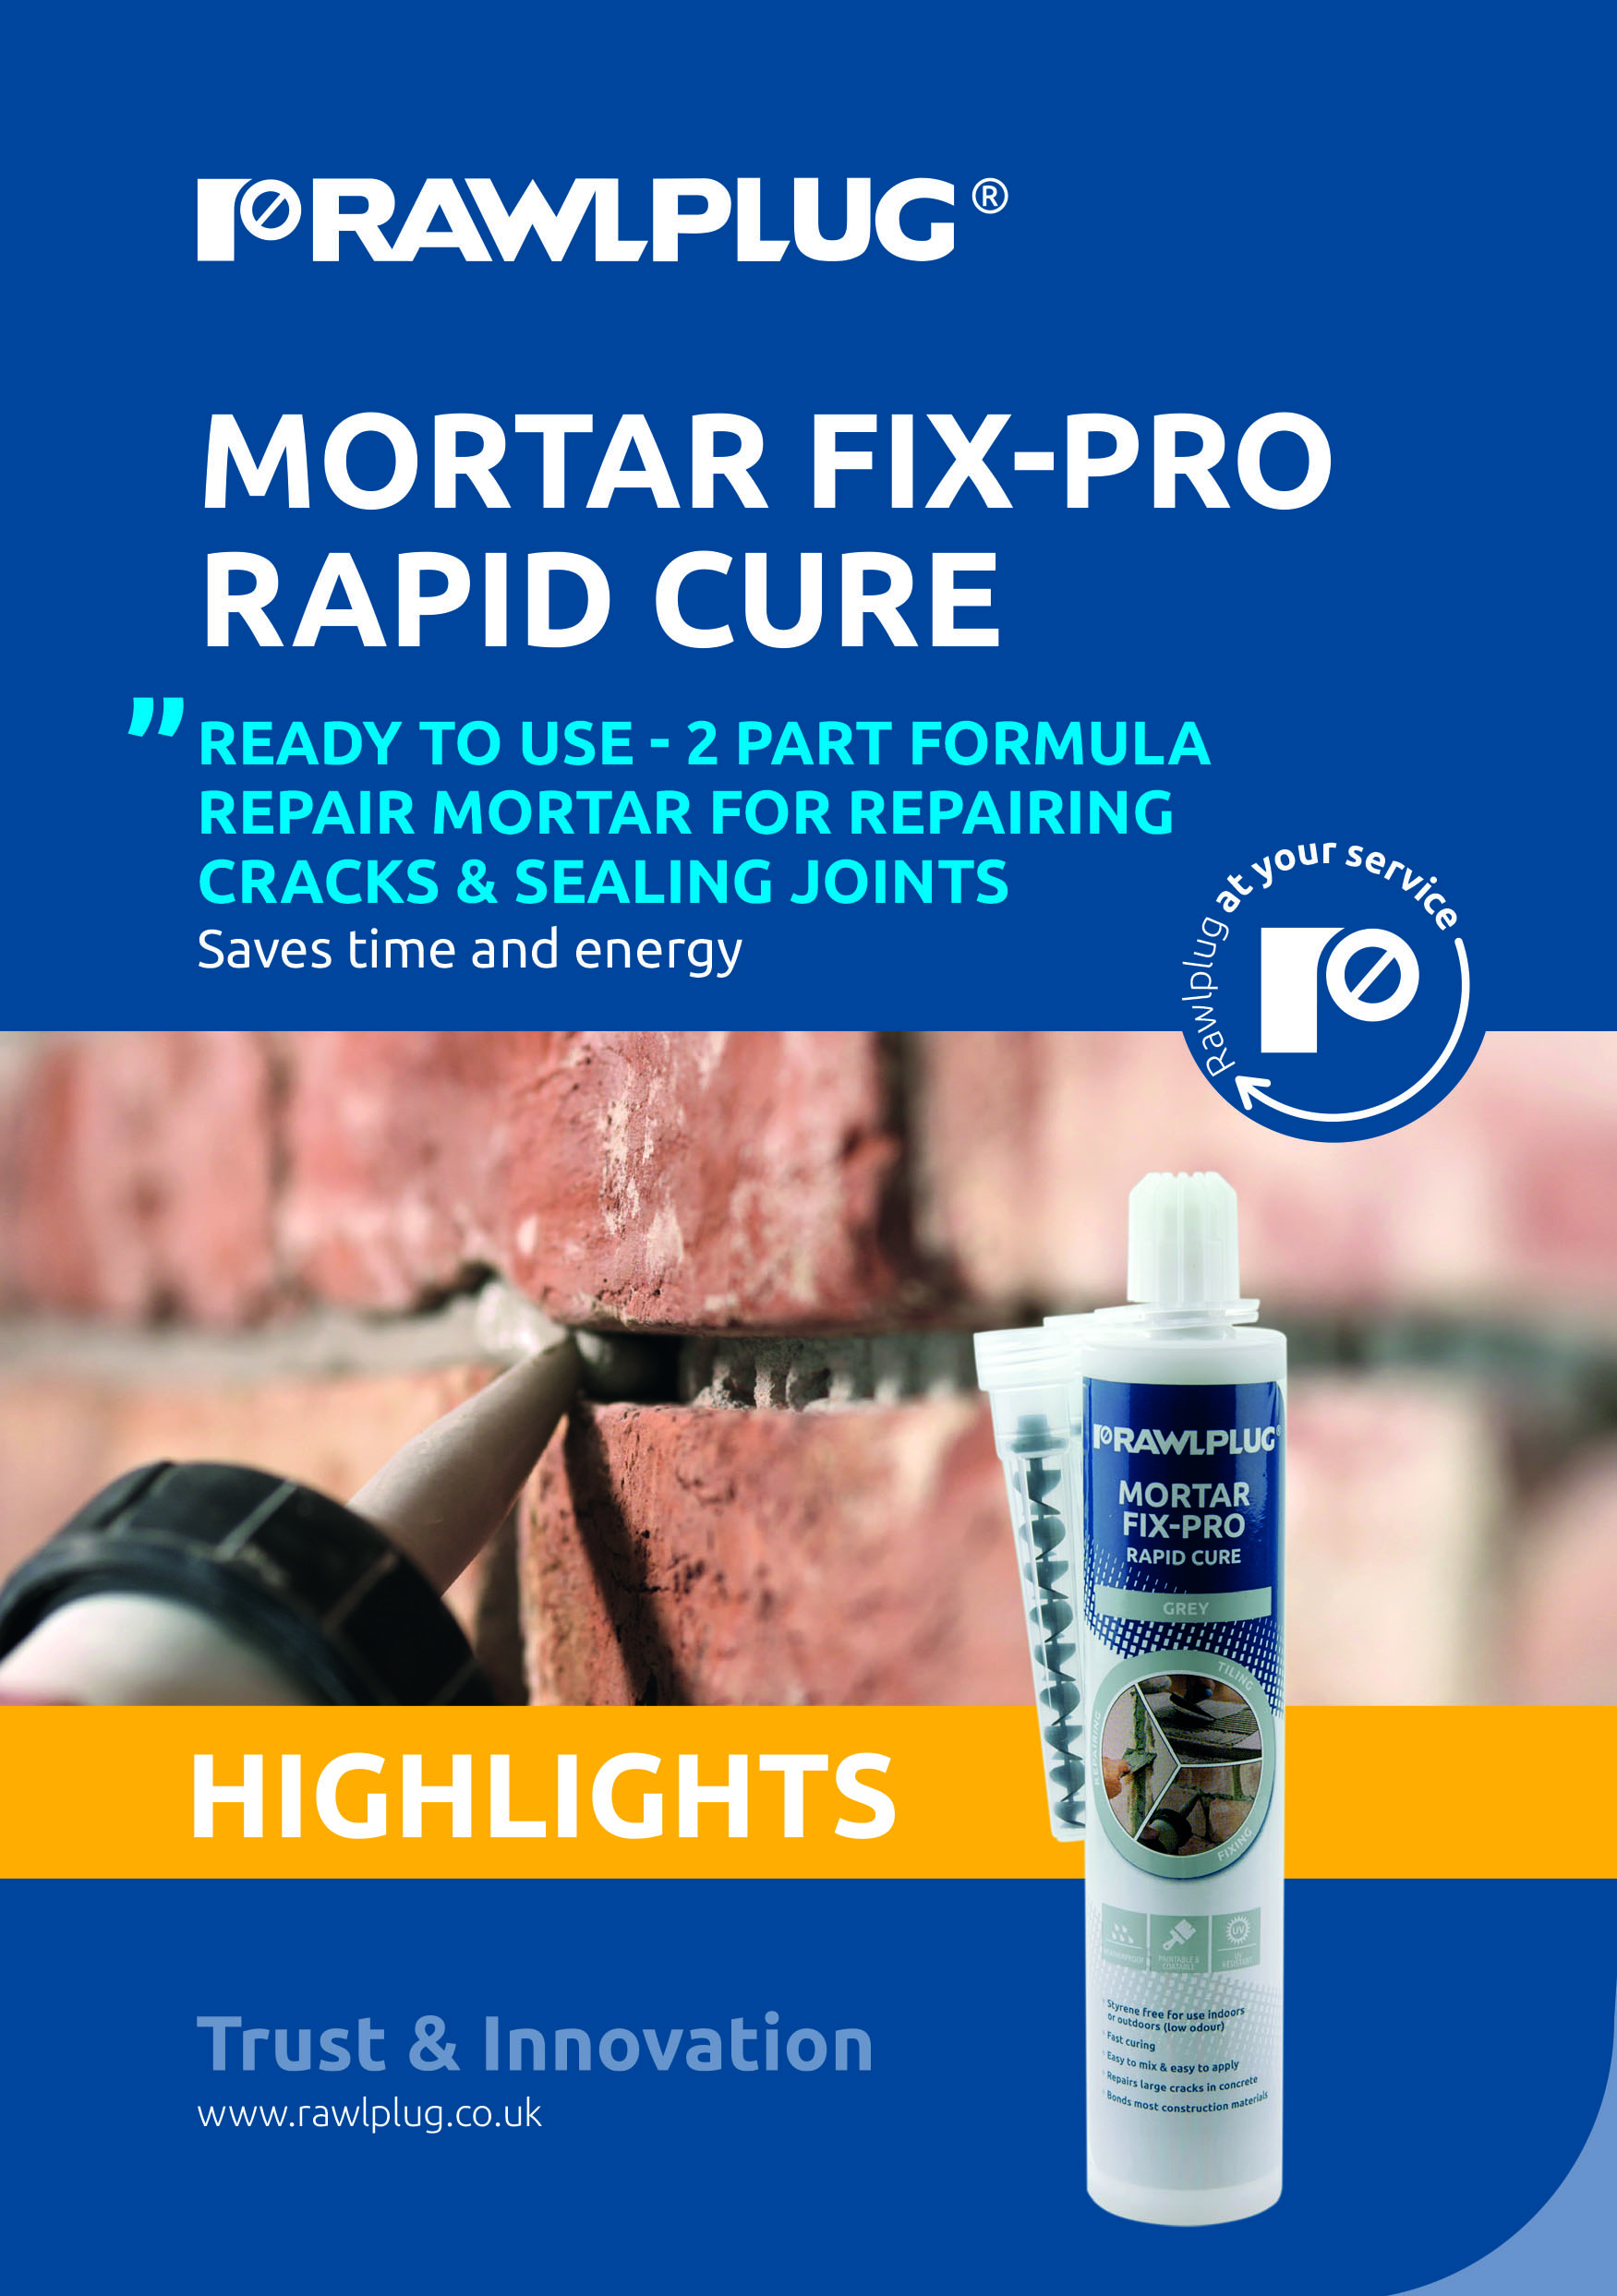 Rawlplug Mortar Fix-Pro